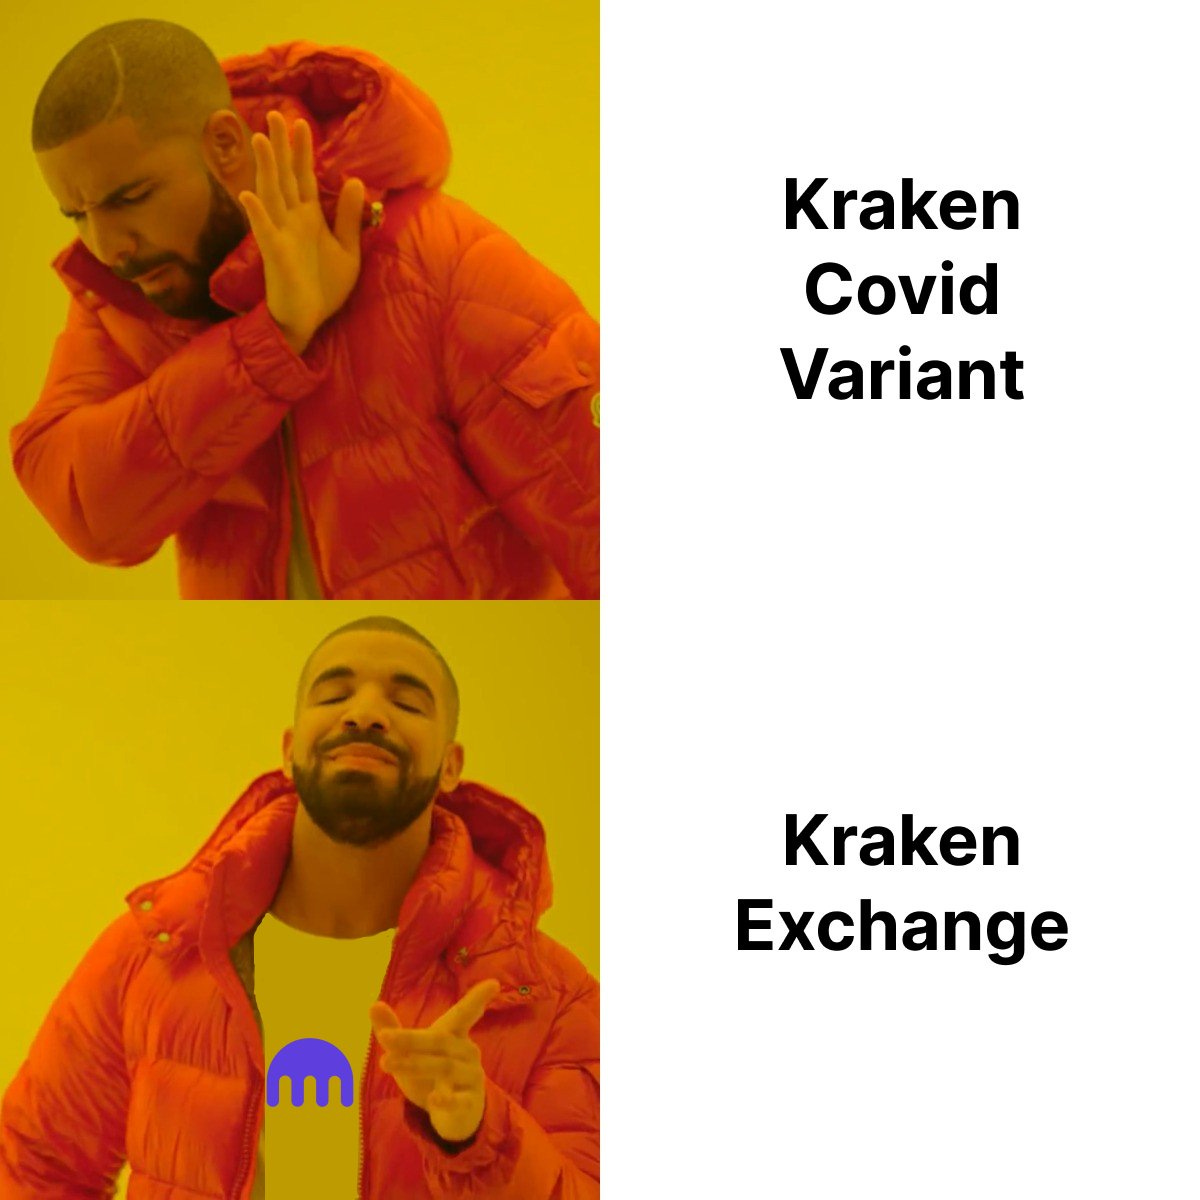 Kraken Exchange on Twitter: "https://t.co/Zq3mzOZsS8" / Twitter